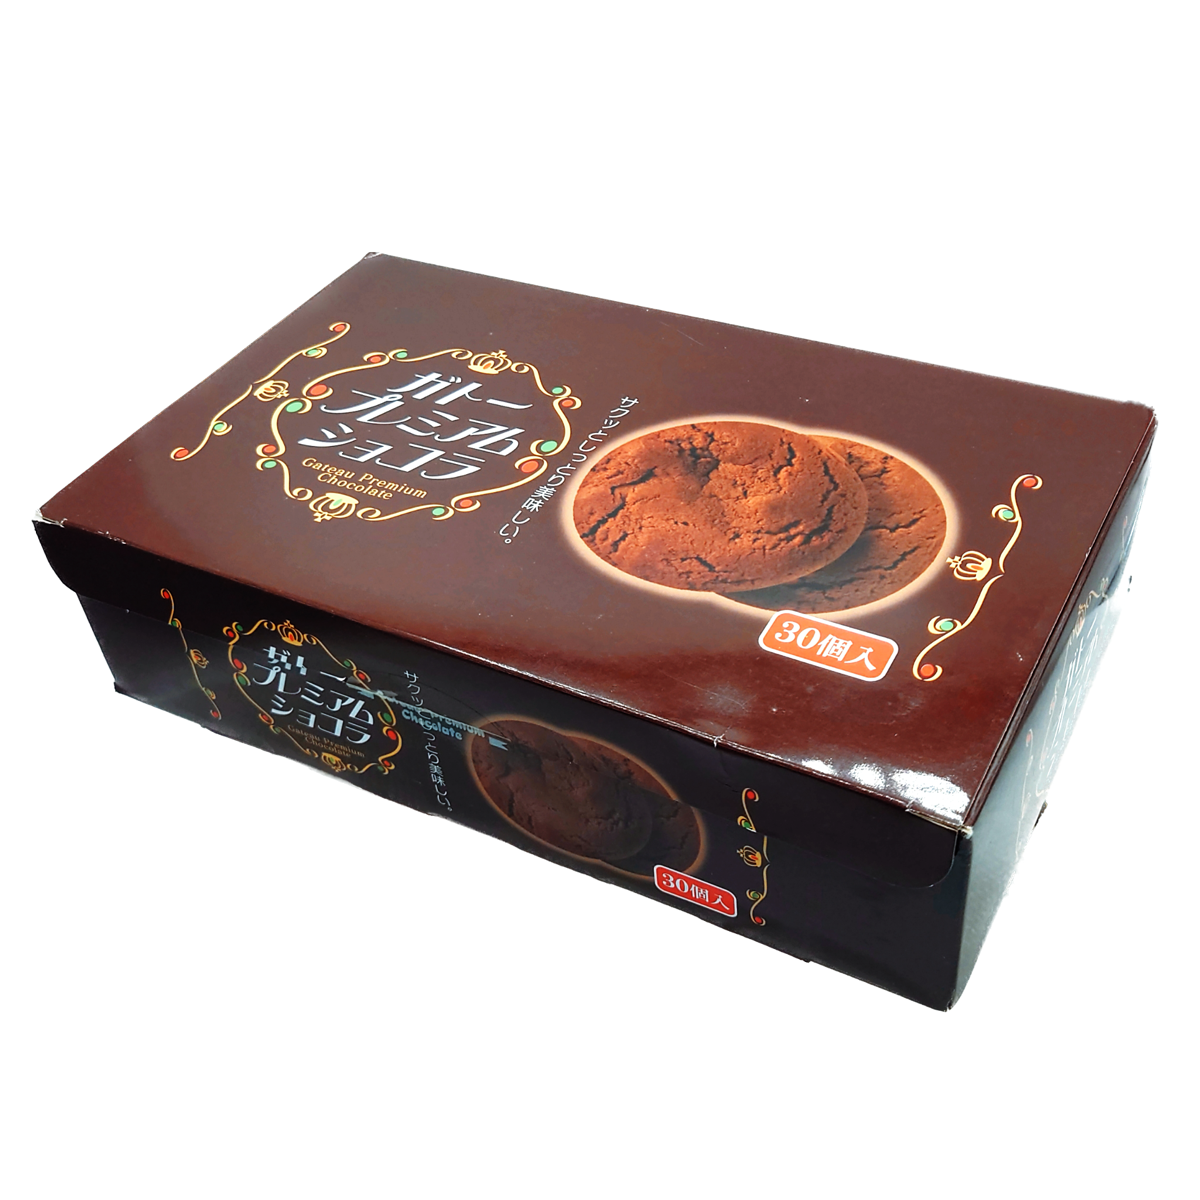 [Shipping] Gateau Chocolate Cookie